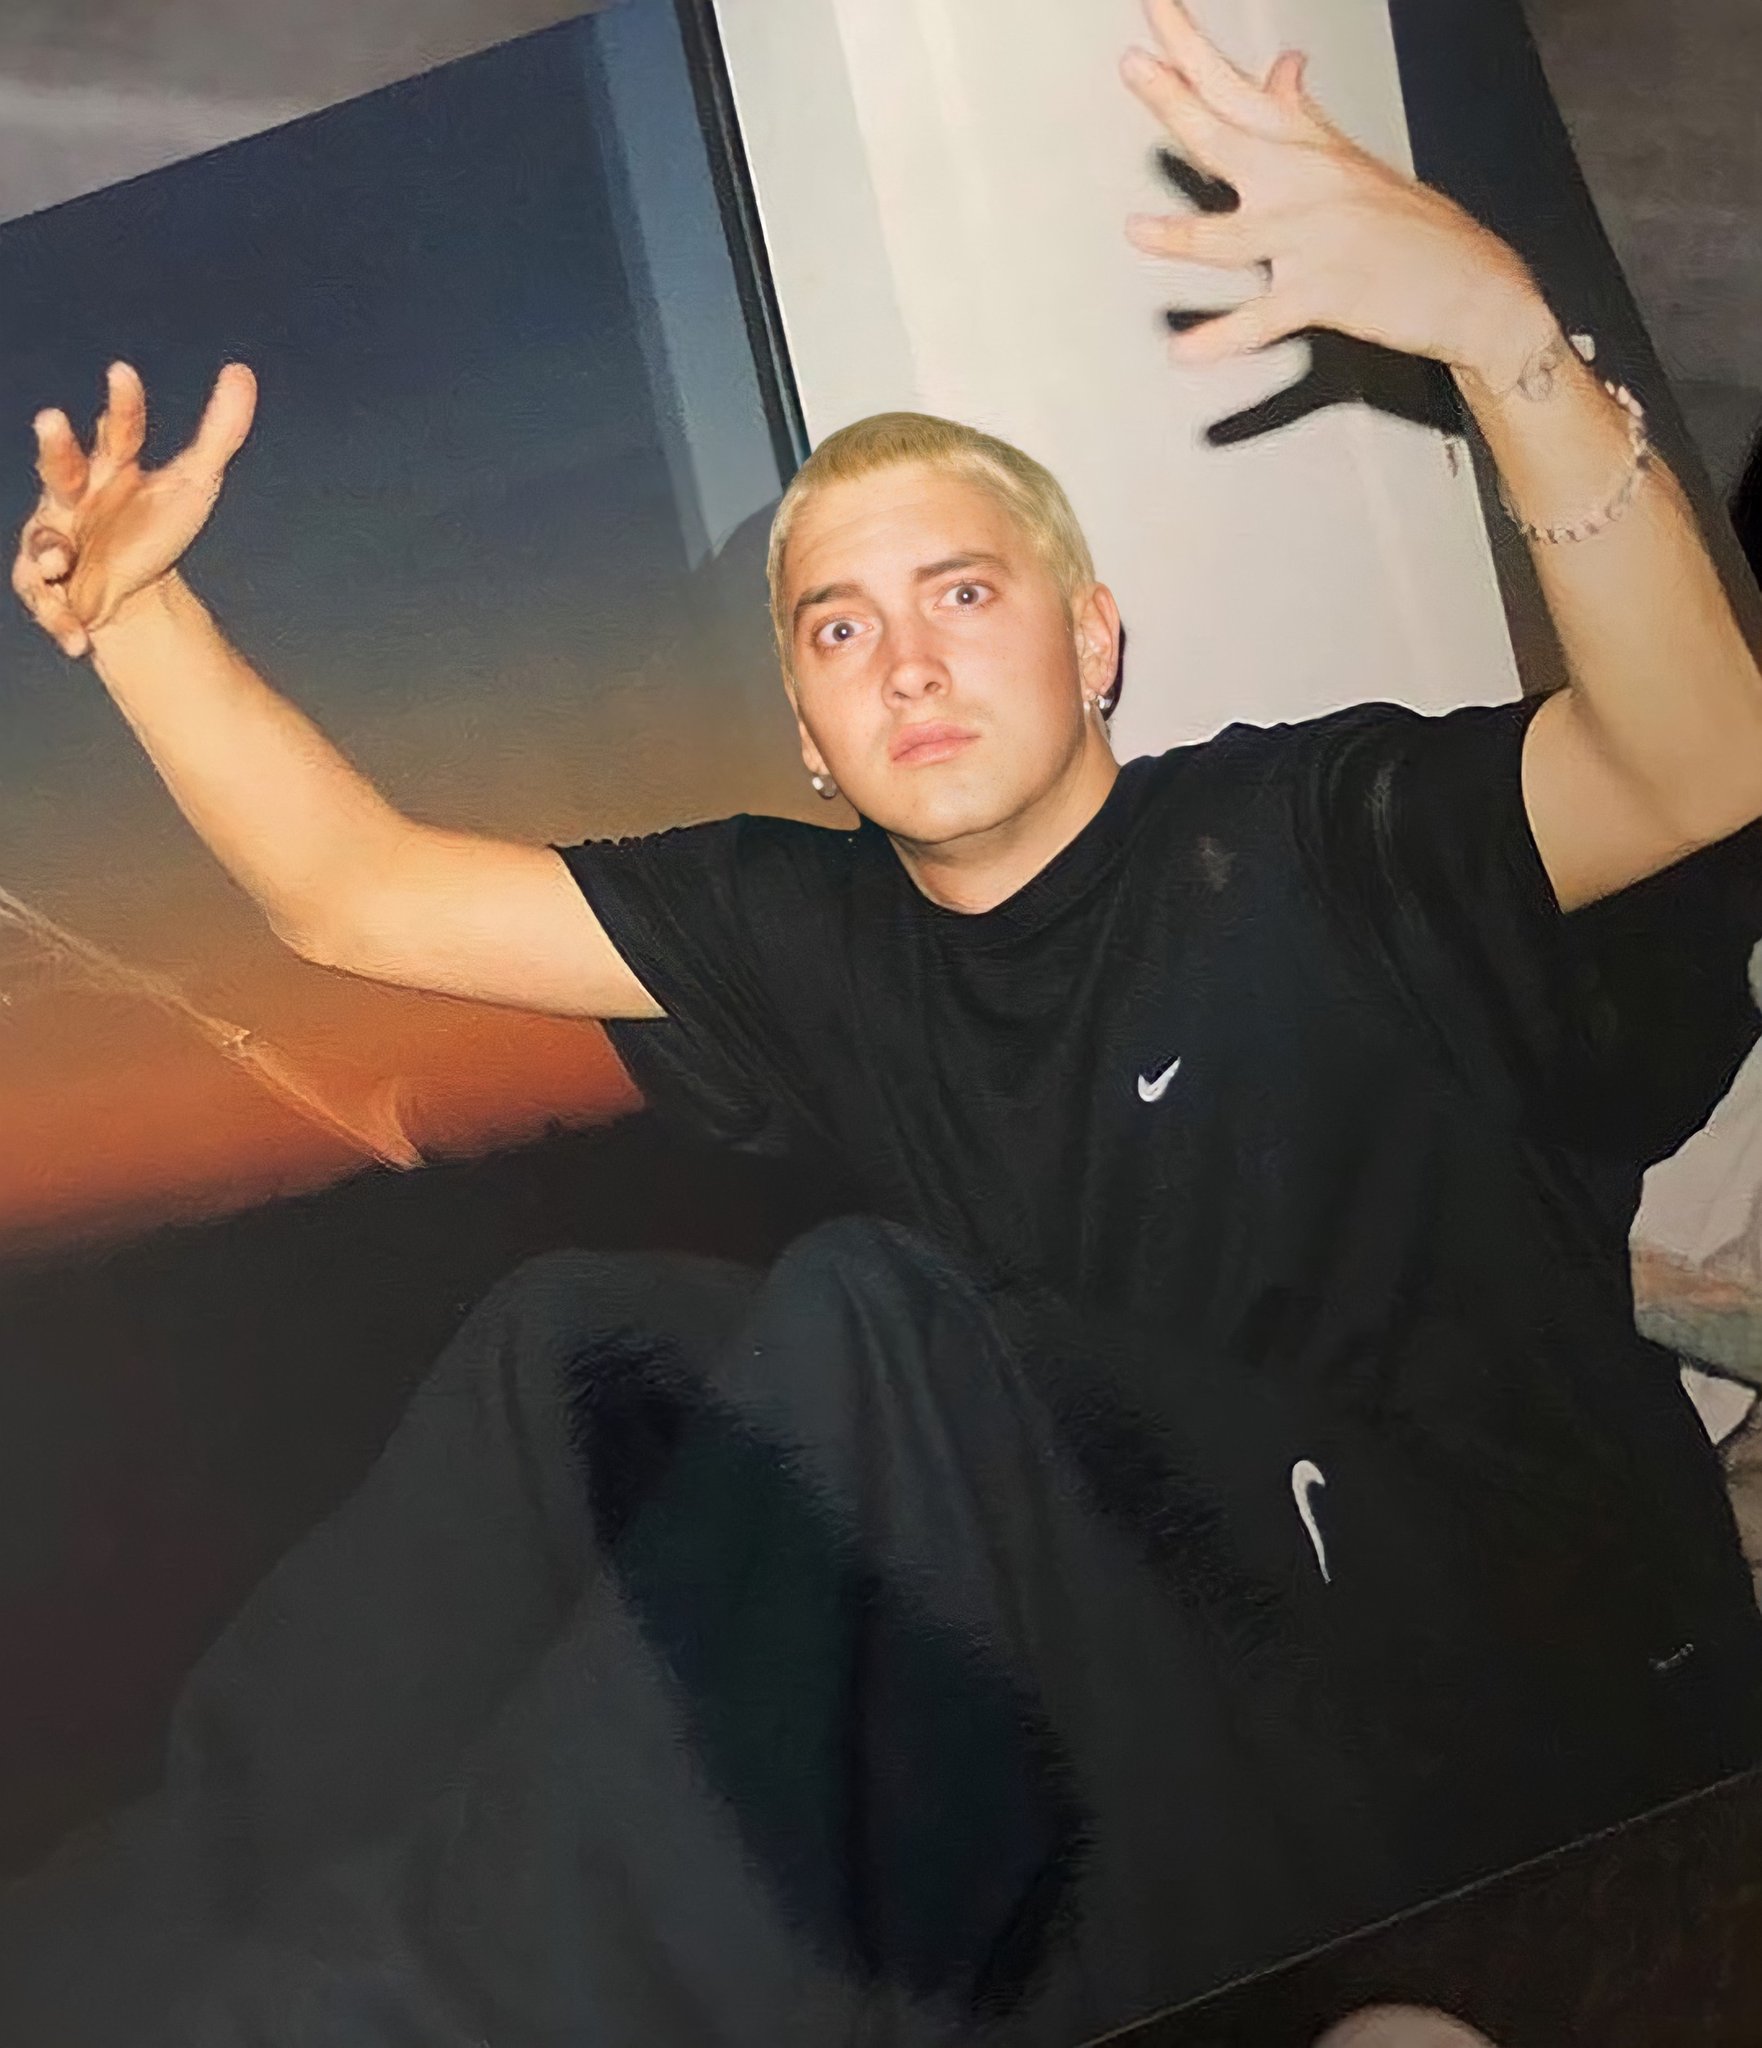 Eminem: Alle Songs 1988 bis 2020 + Ranking aller Alben [Abgeschlossen] |  Page 18 | MZEE.com